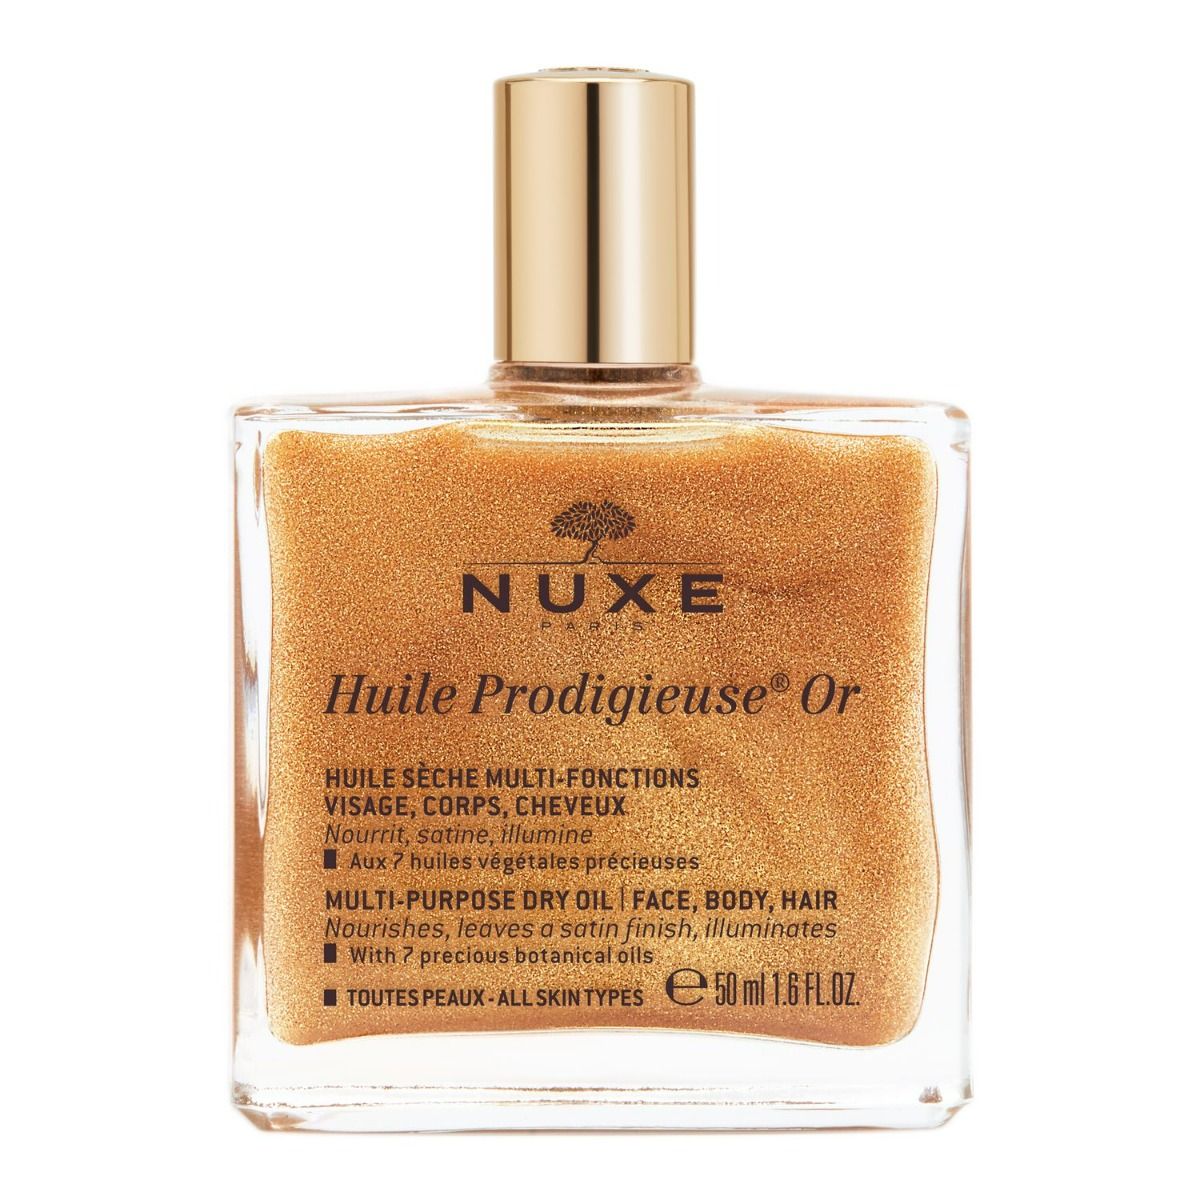 Nuxe Huile Prodigieuse Or масло для лица, тела и волос, 50 ml nuxe цветочное сухое масло huile prodigieuse florale 50 мл nuxe prodigieuse